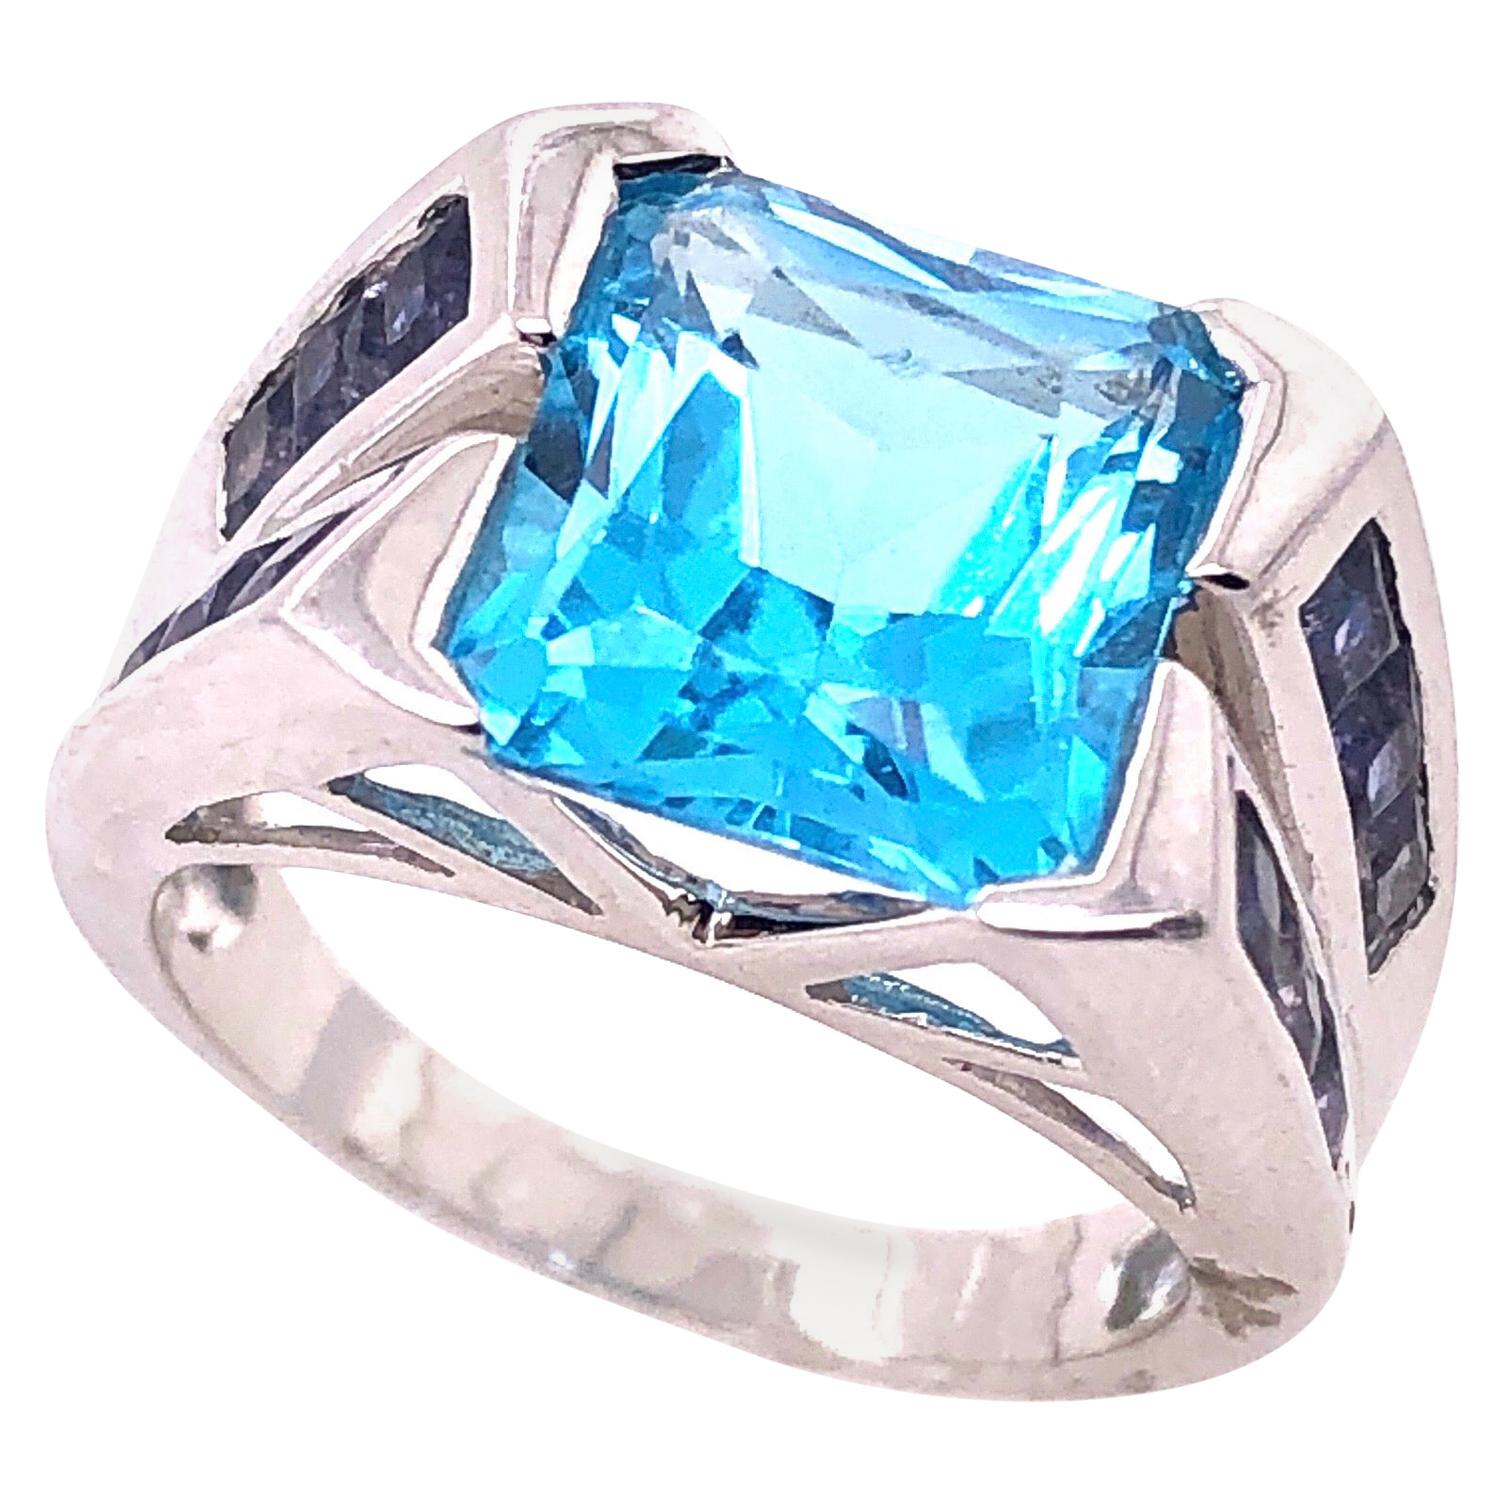 14 Karat White Gold and Blue Zirconium Ring For Sale